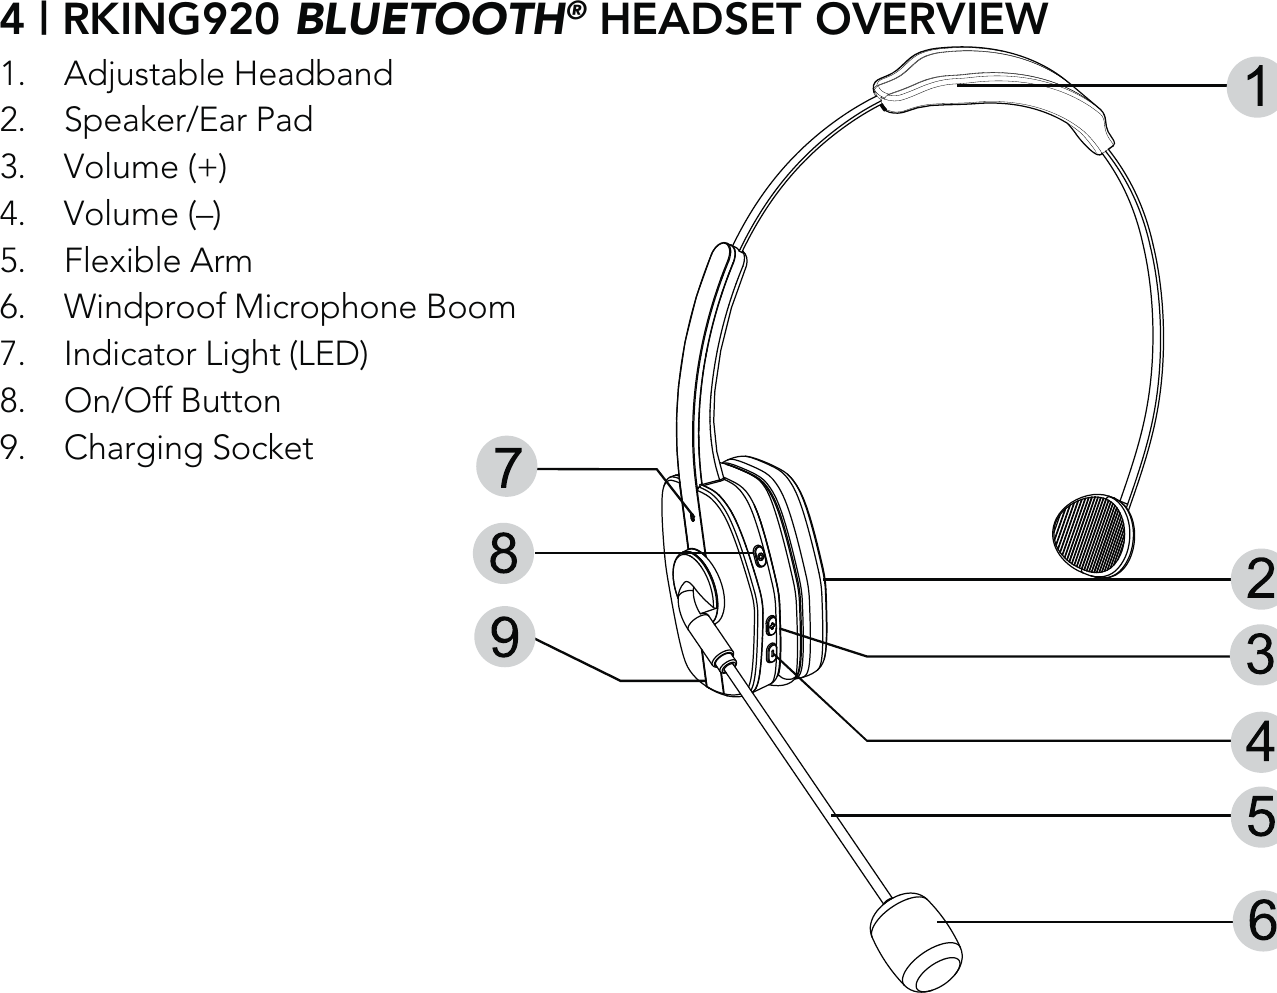 4 | RKING920 BLUETOOTH® HEADSET OVERVIEW1. Adjustable Headband 2. Speaker/Ear Pad 3. Volume (+) 4. Volume (–) 5. Flexible Arm 6. Windproof Microphone Boom 7. Indicator Light (LED) 8. On/Off Button 9. Charging Socket